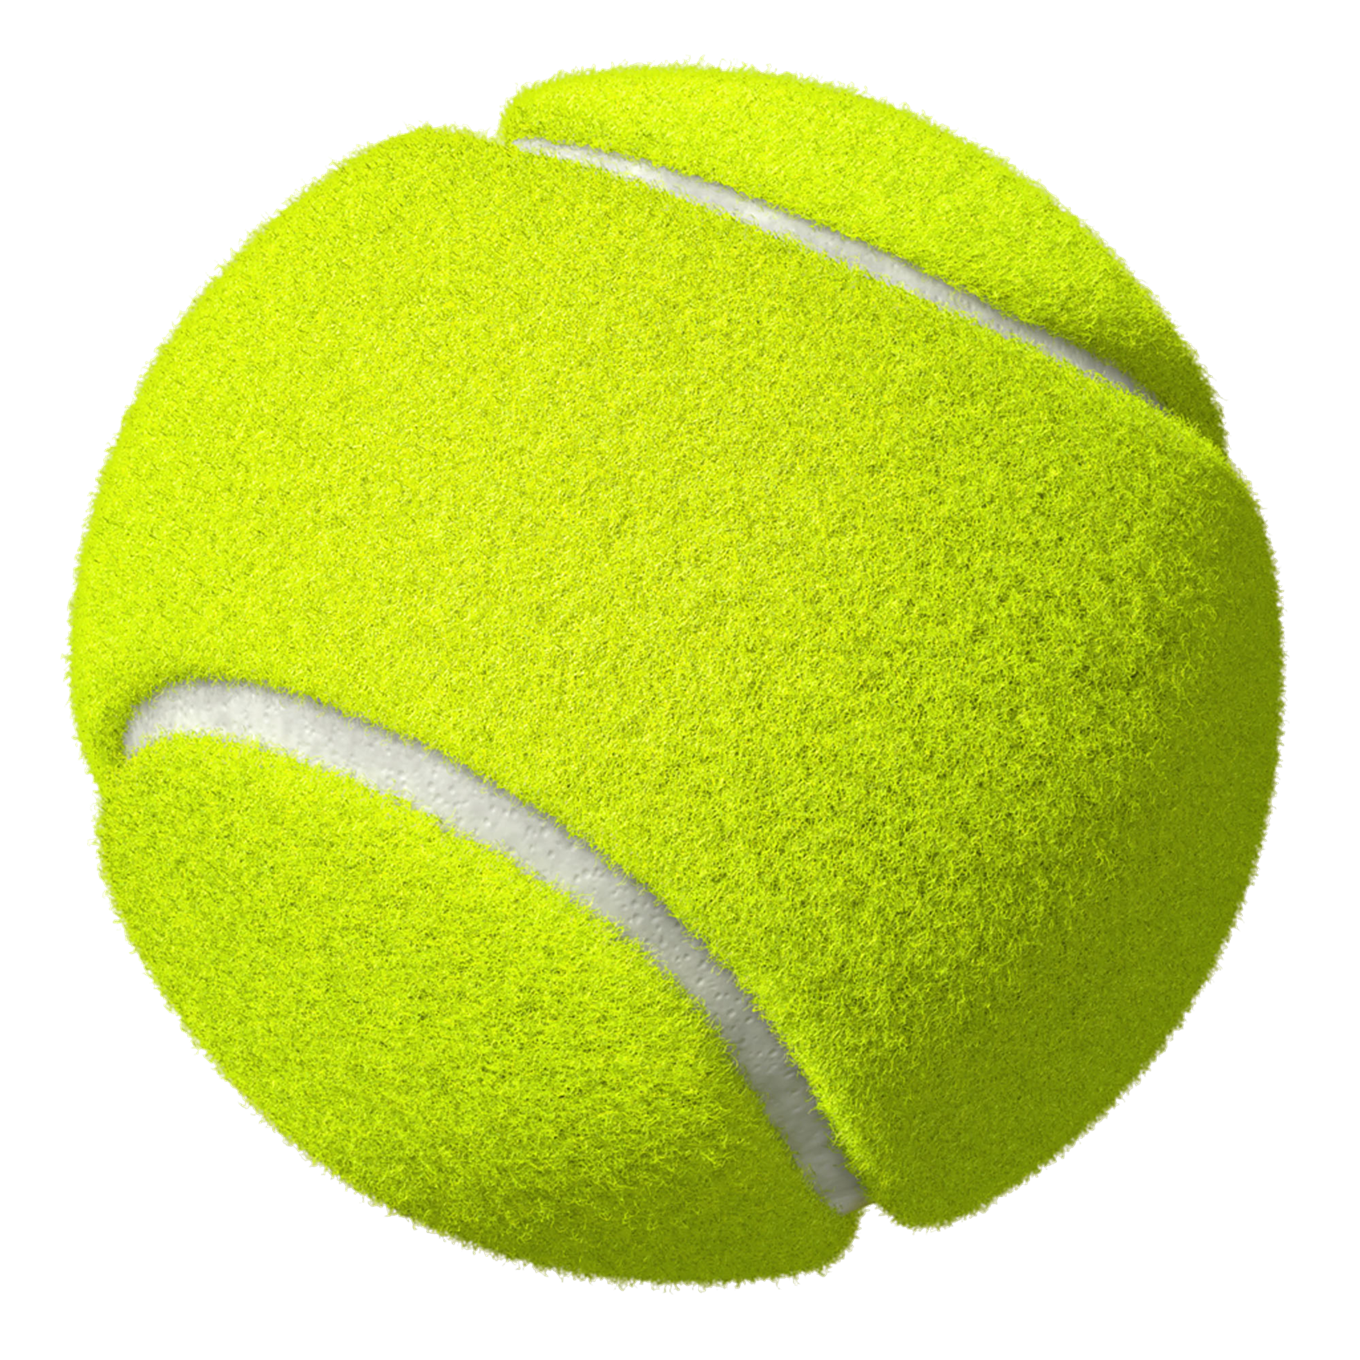 Image Transparente de balle de tennis